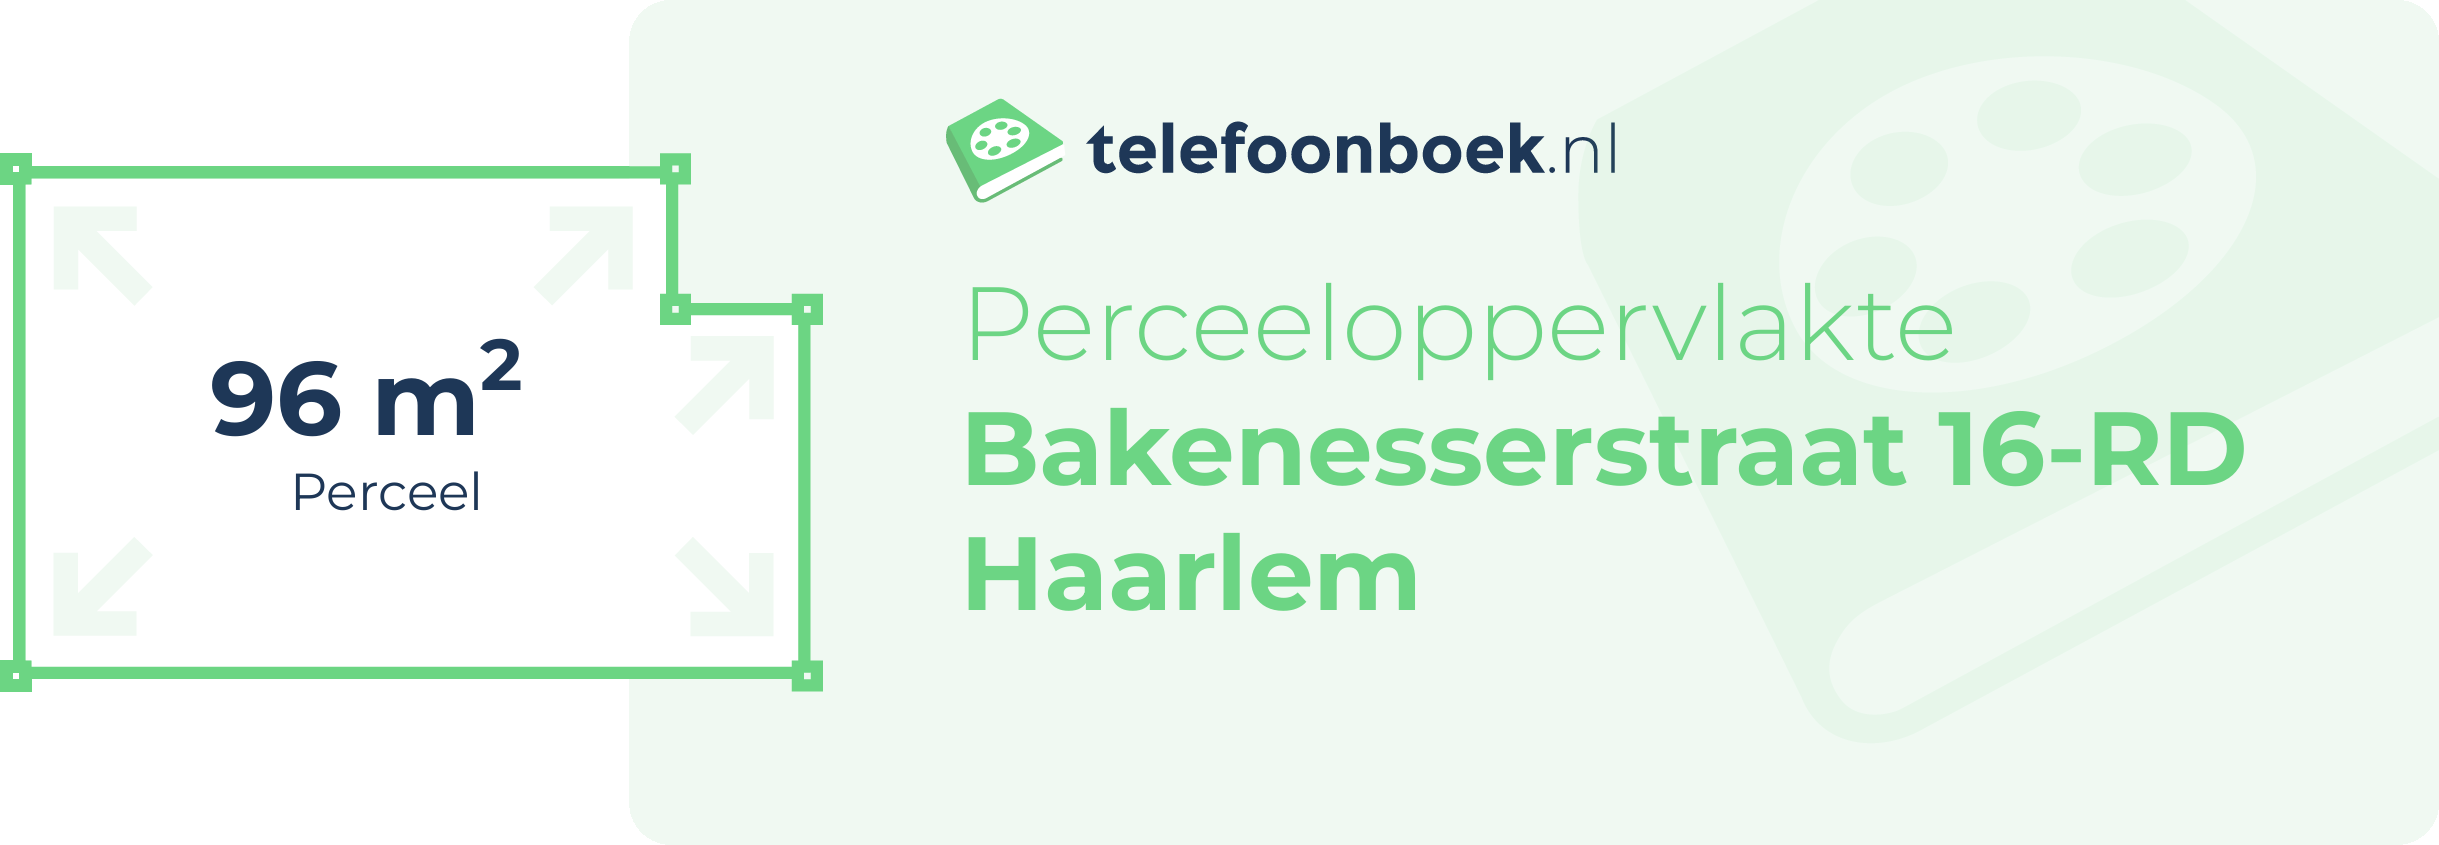 Perceeloppervlakte Bakenesserstraat 16-RD Haarlem